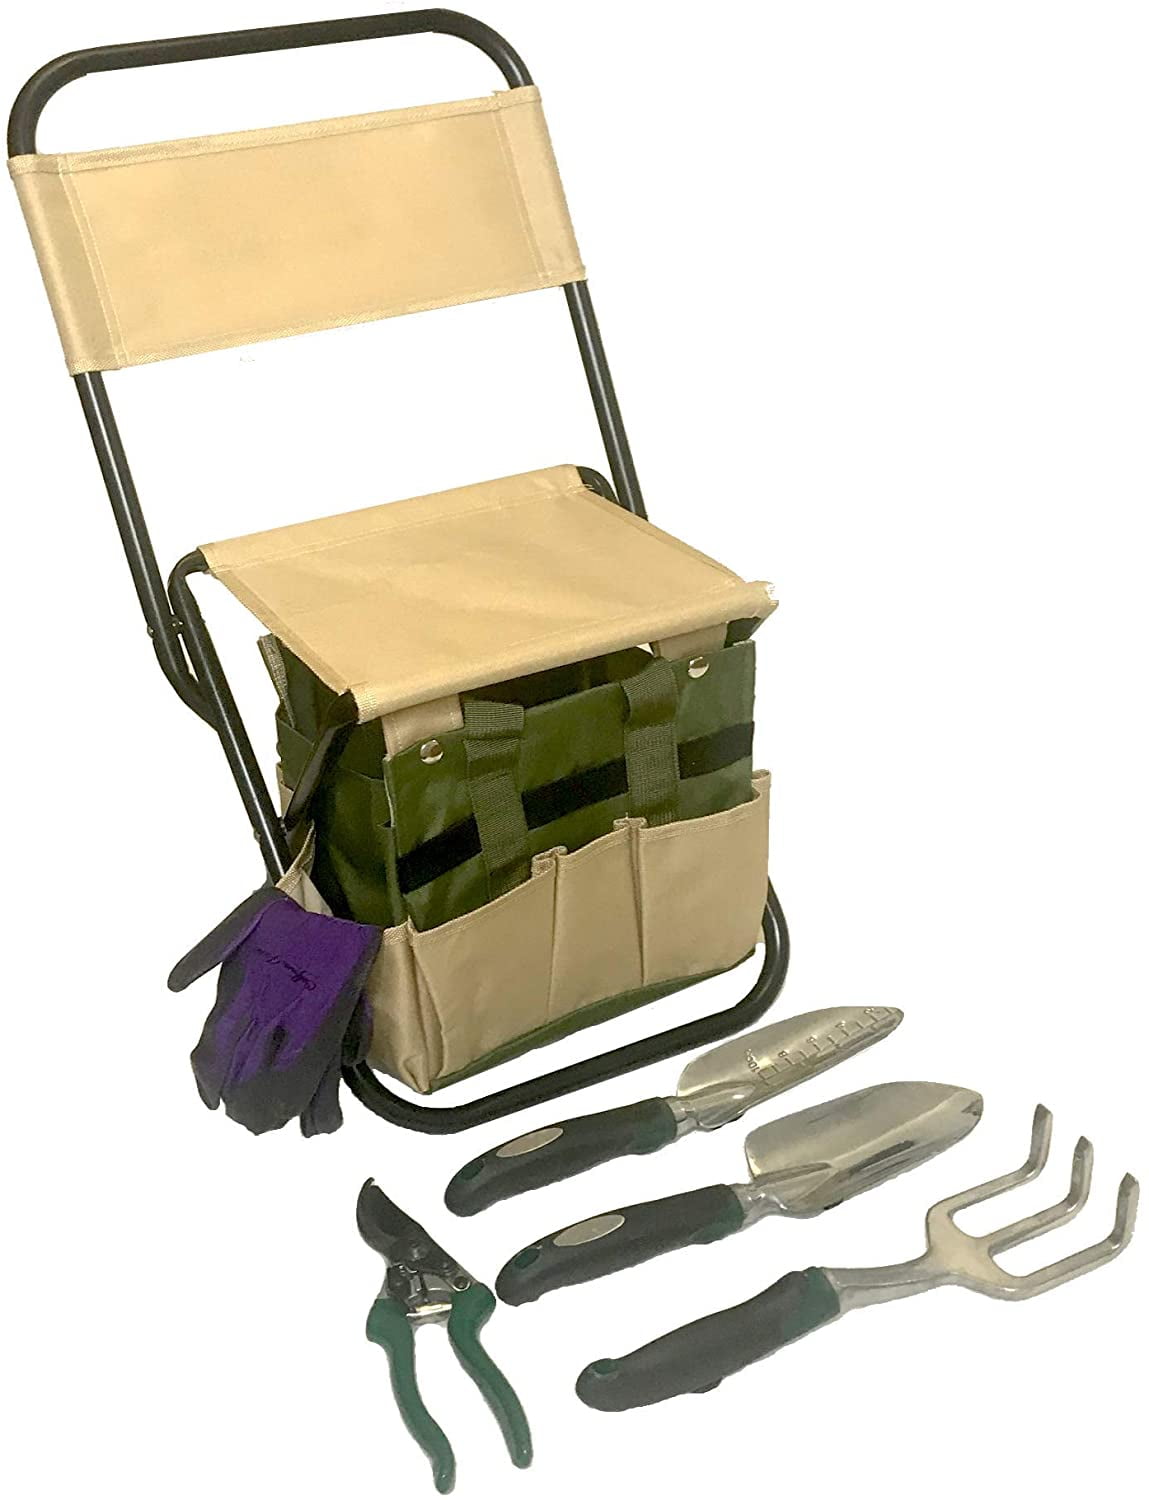 Gardening Gardener Folding Chair with Tools Portable Storage Organizer 